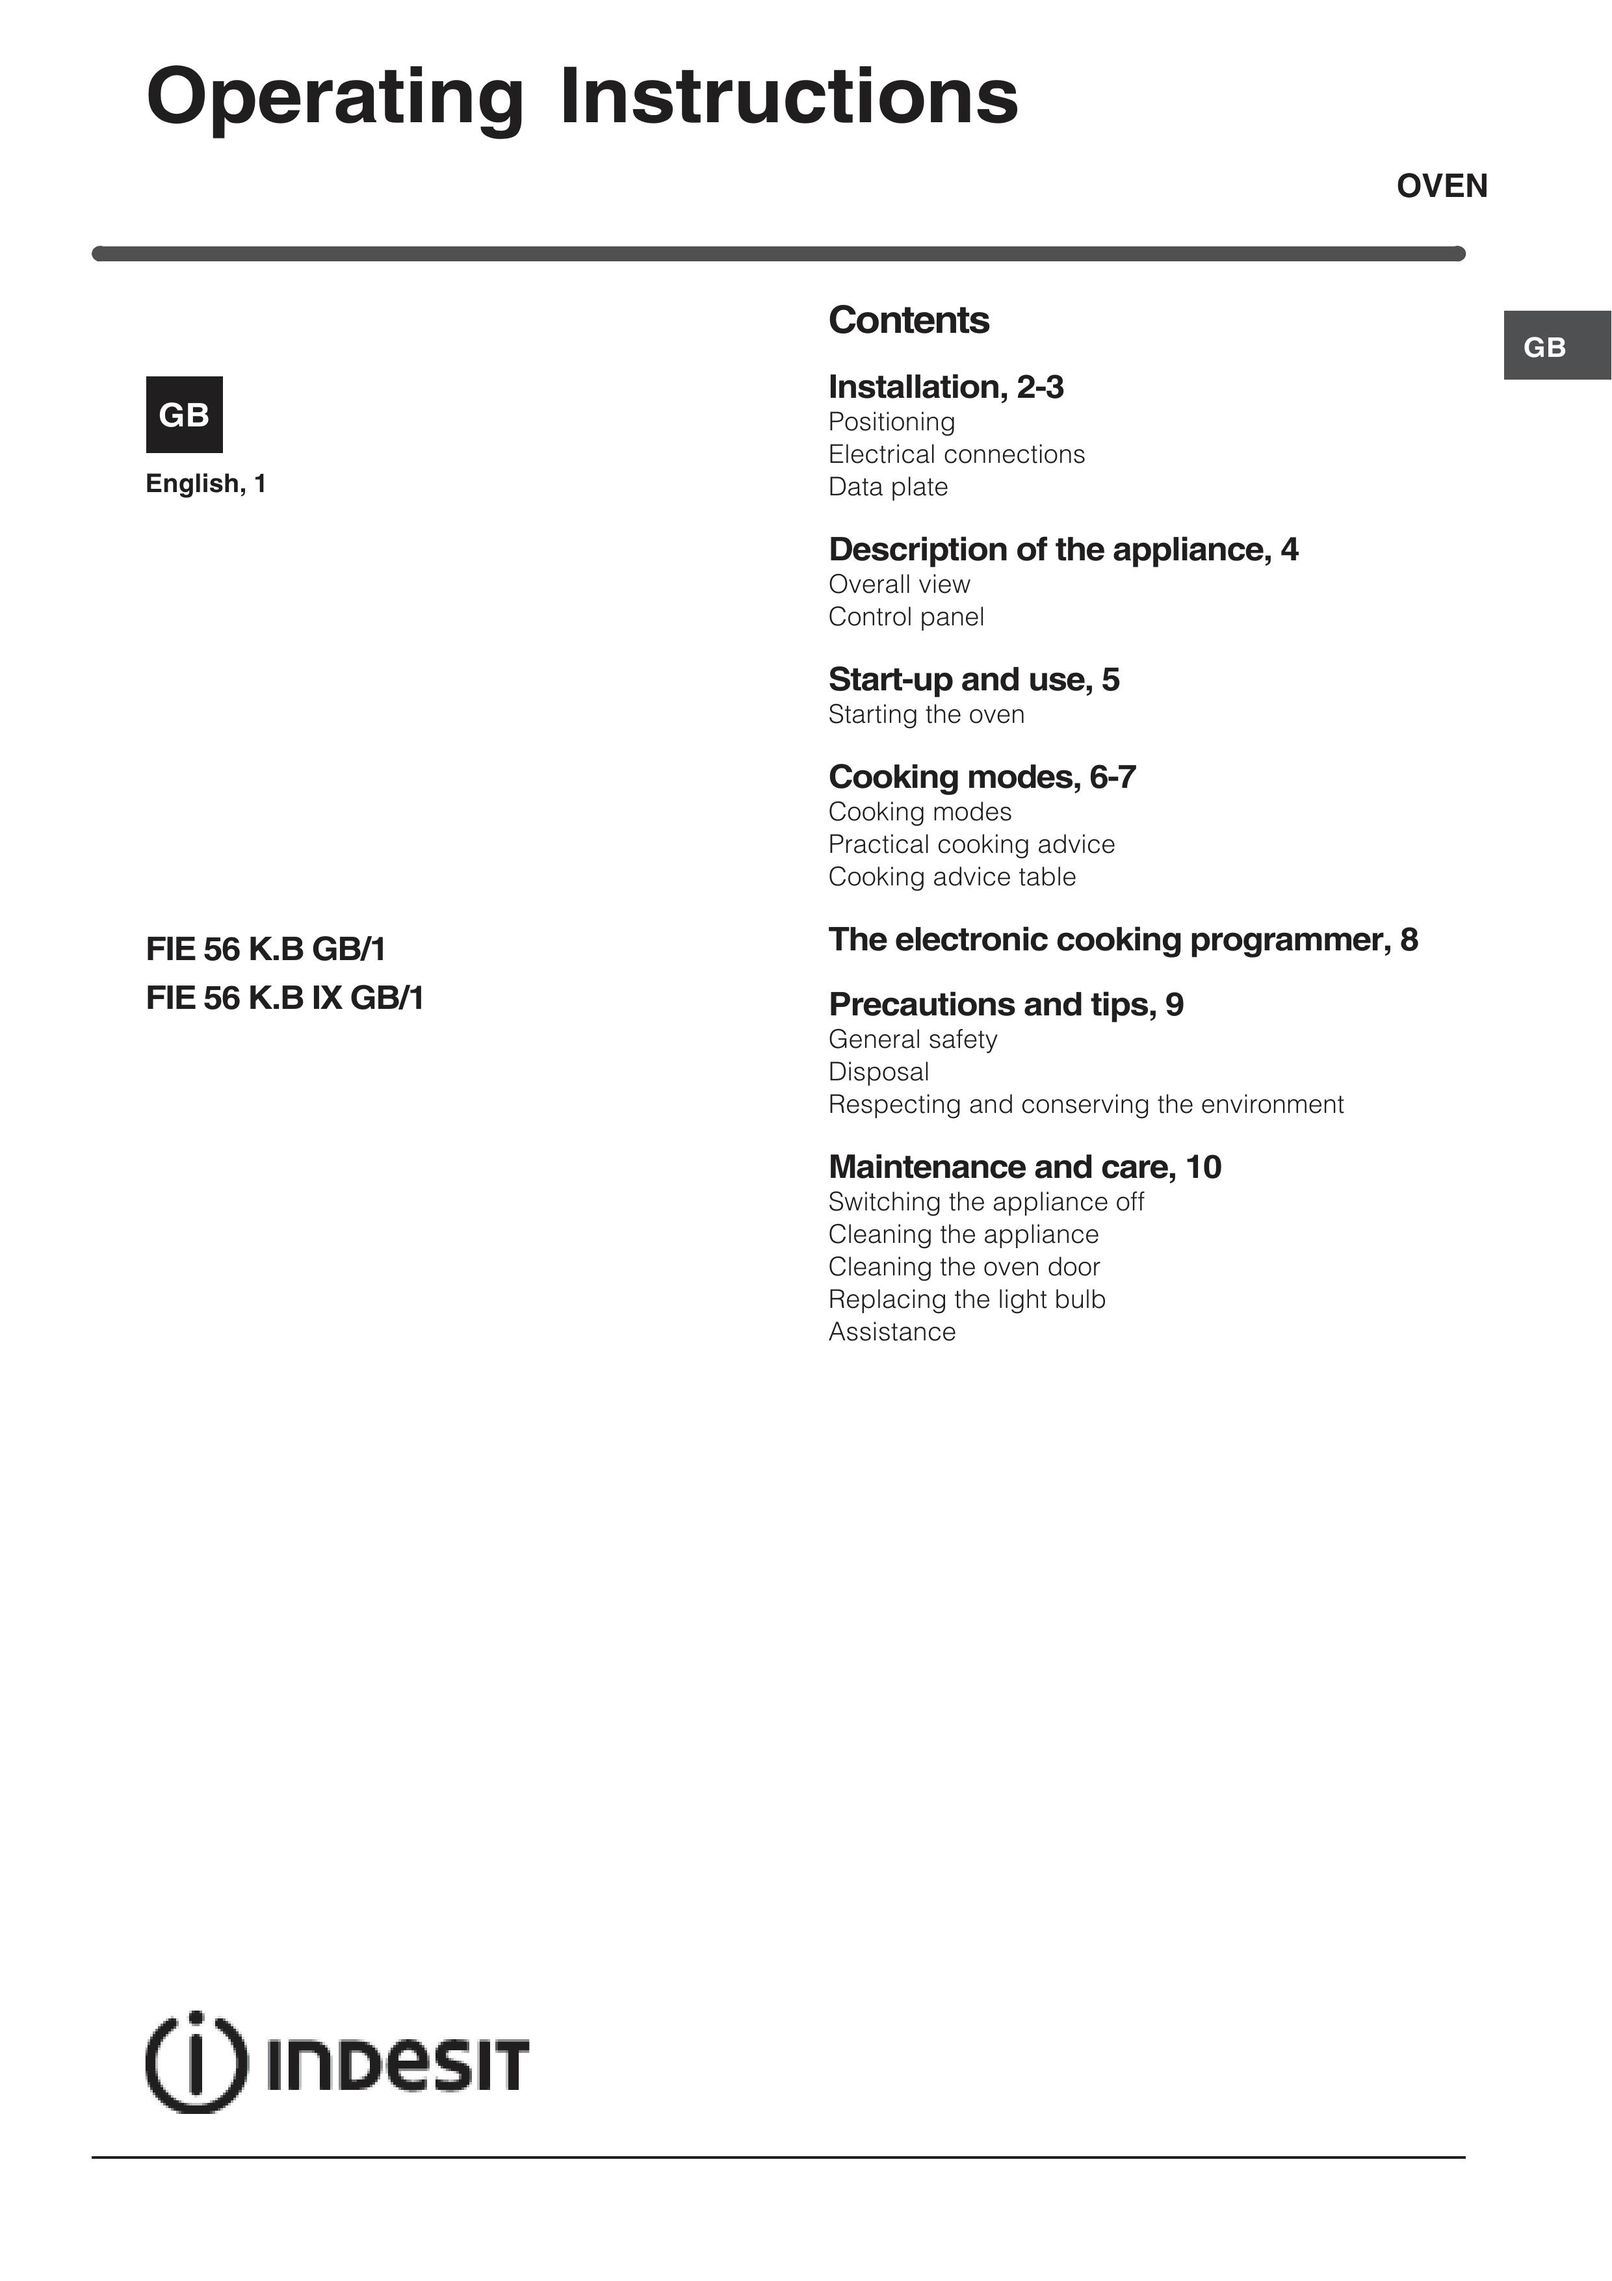 Indesit FIE 56 K.B IX GB/1 Oven User Manual